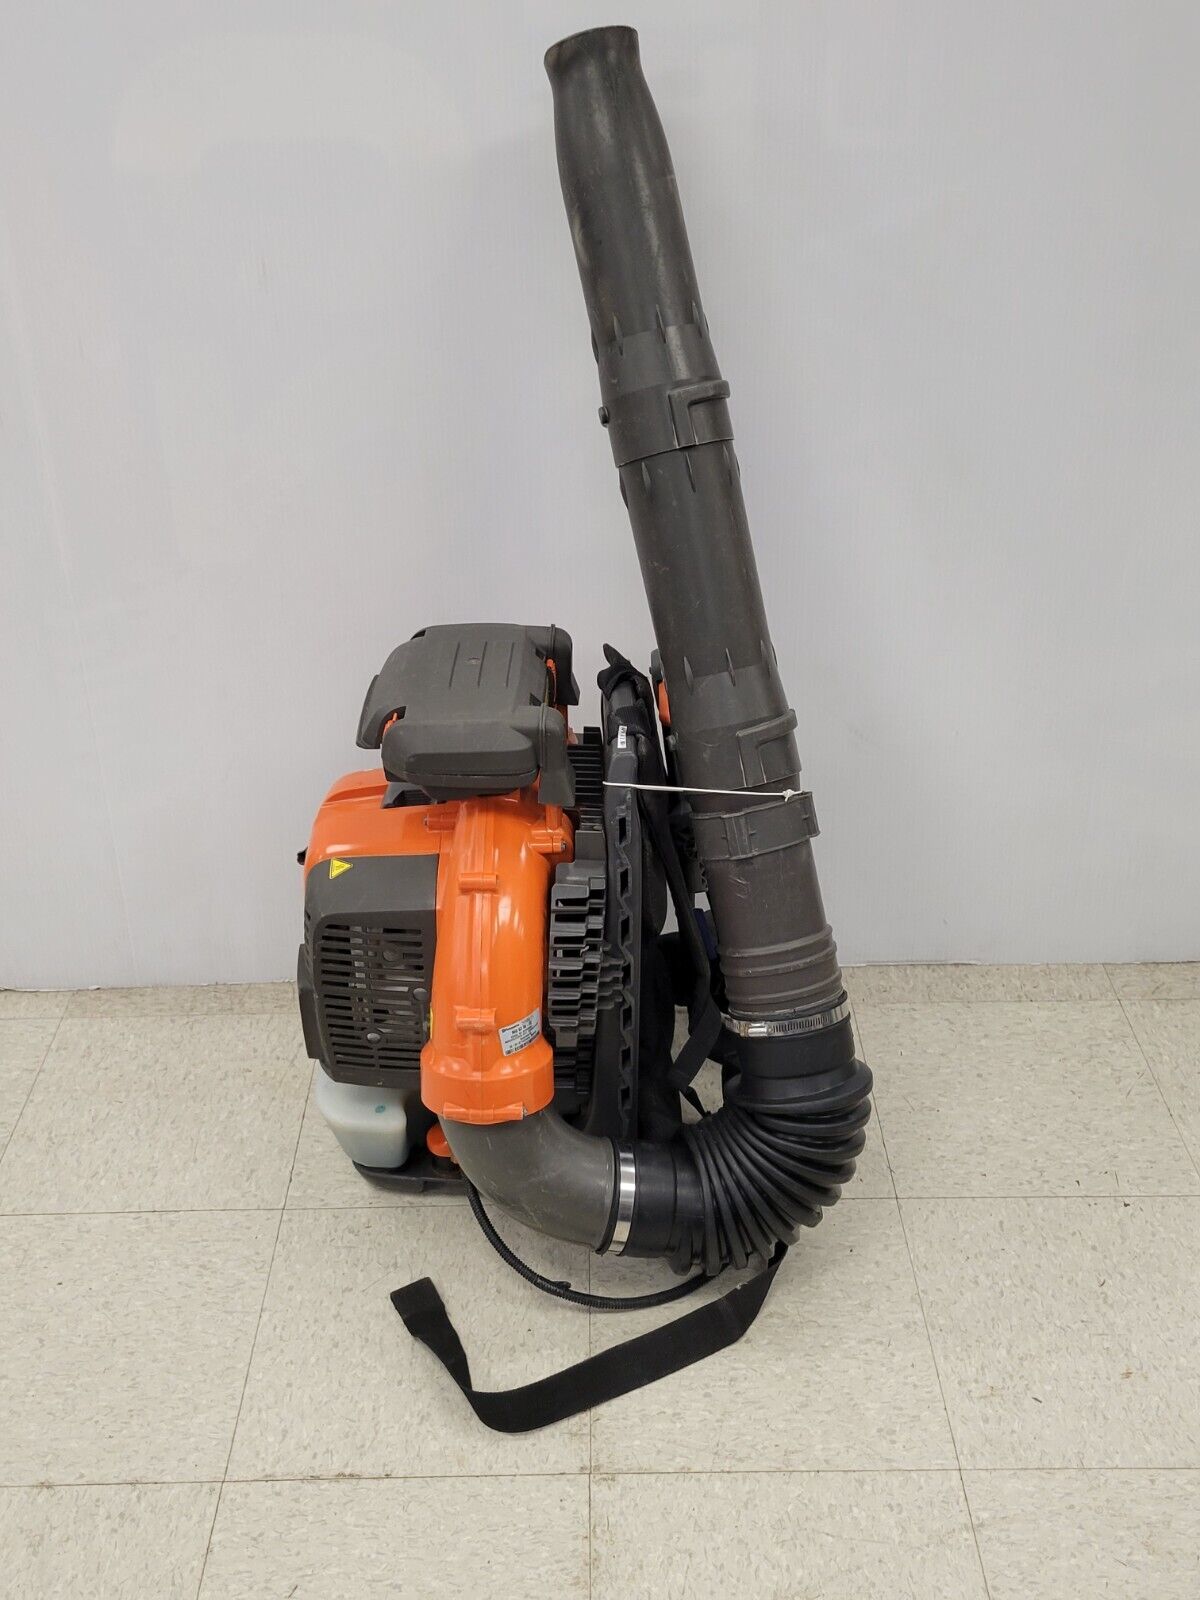 (57181-1) Husqvarna 58 OBTS Backpack Blower